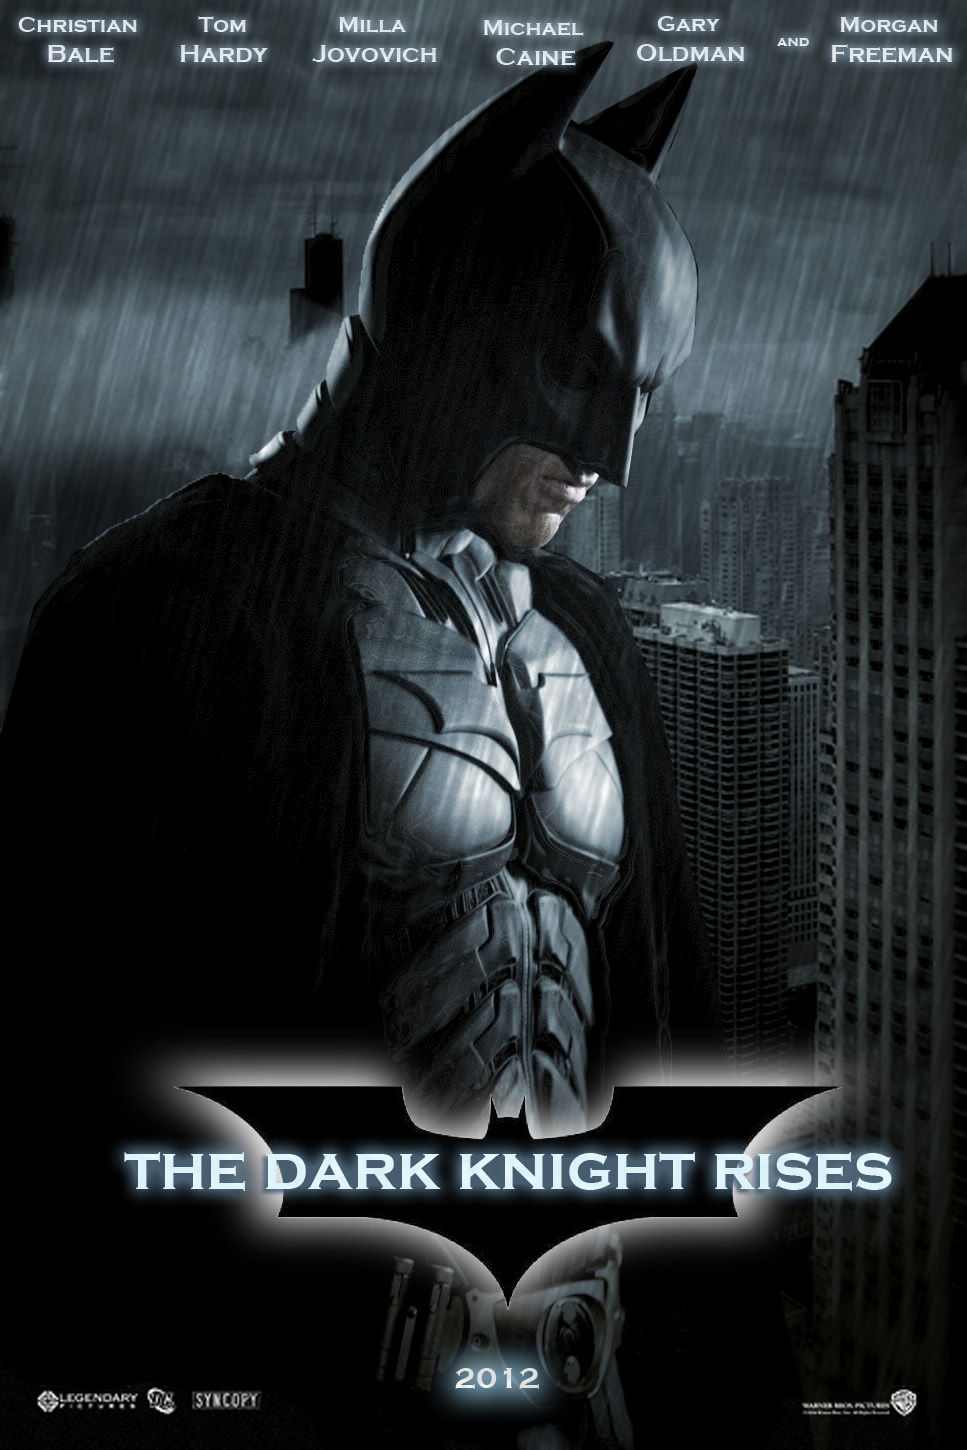 http://blog.commarts.wisc.edu/wp-content/uploads/2012/07/Batman-The-Dark-Knight-Rises-the-dark-knight-rises-30411051-967-1450.jpg